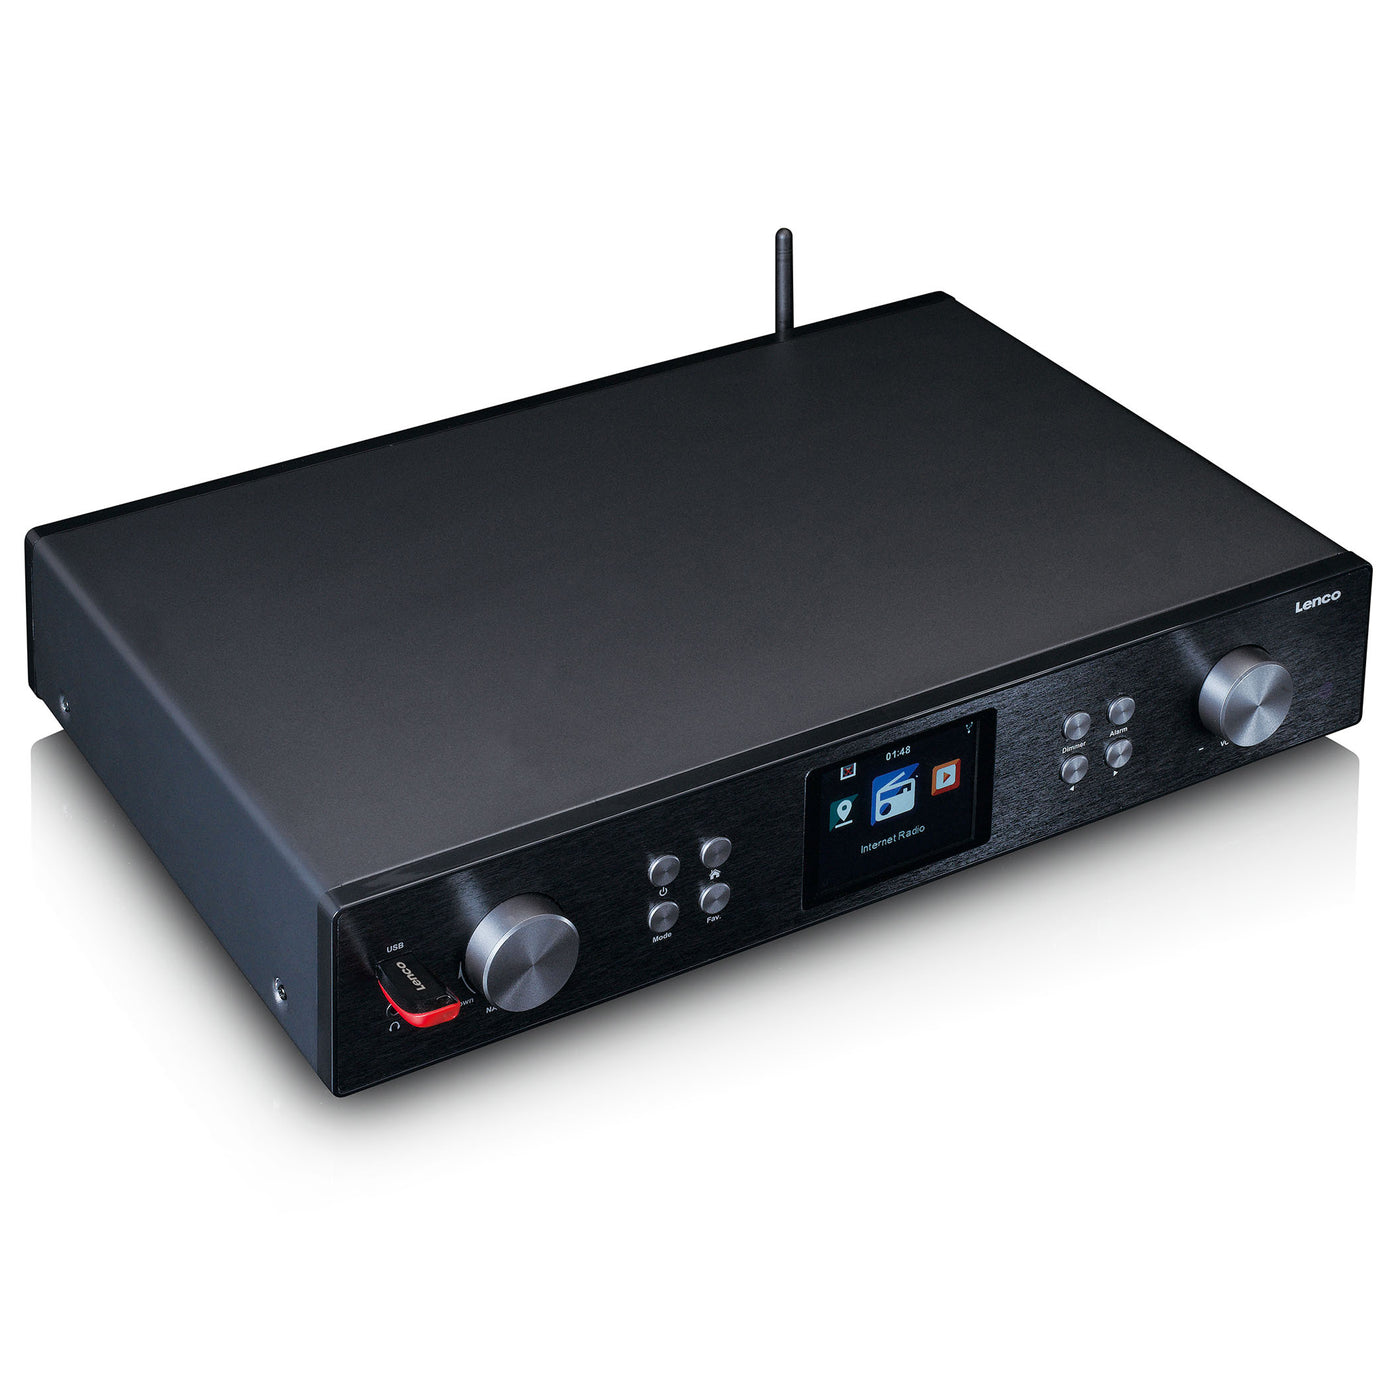 LENCO DIR-250BK - Internetradio met DAB+/FM/MP3-speler en Bluetooth® - Zwart